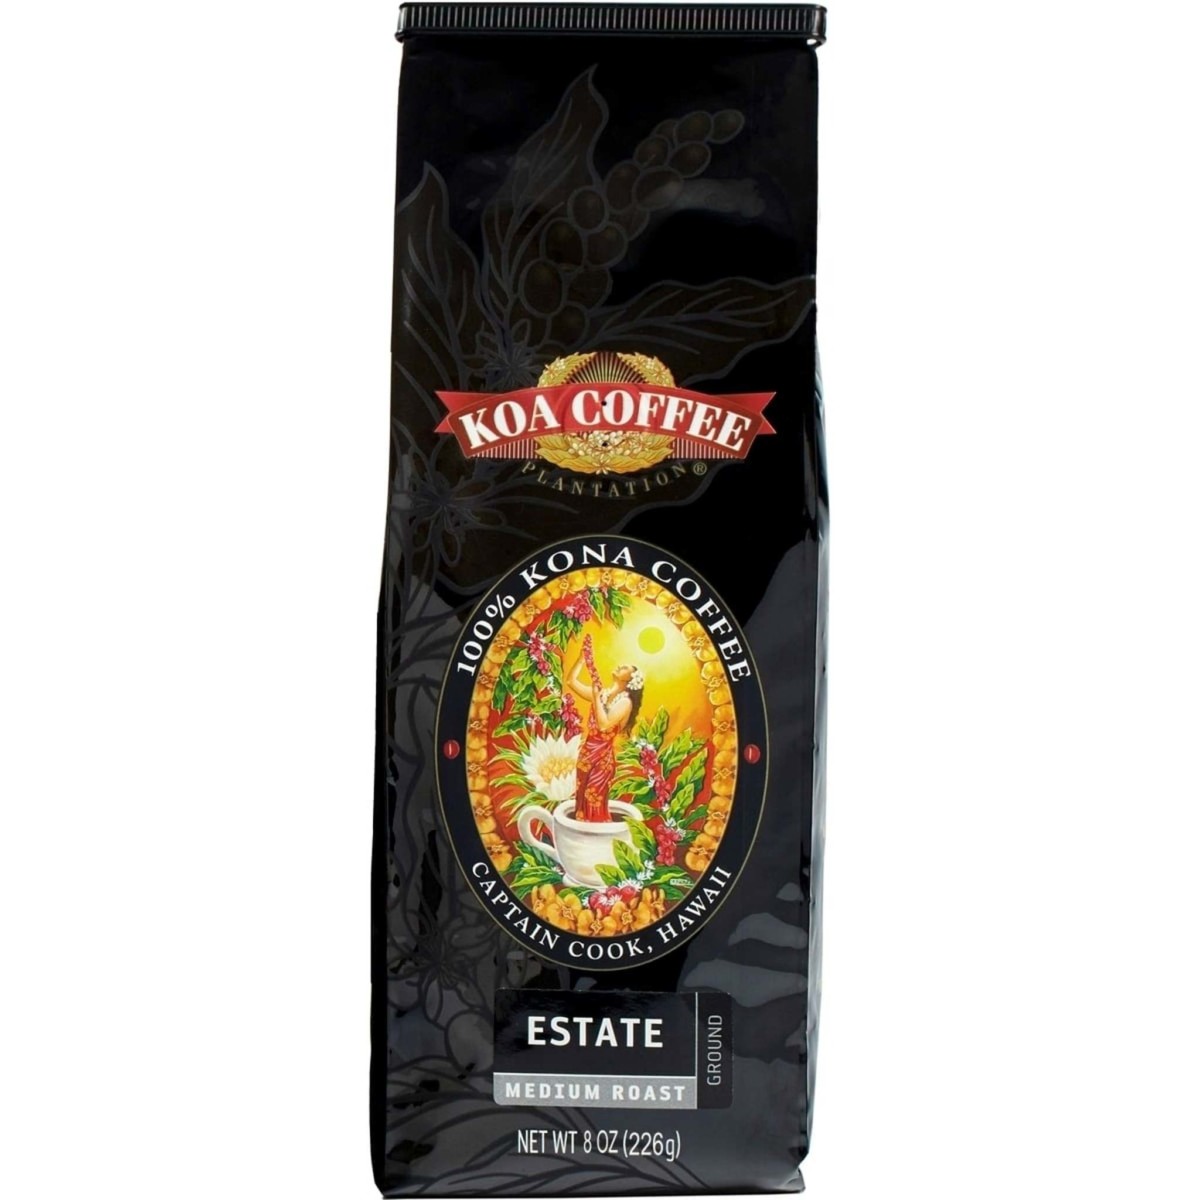 the best coffee to buy, Koa Coffee, what is the best coffee, Kona Coffee,